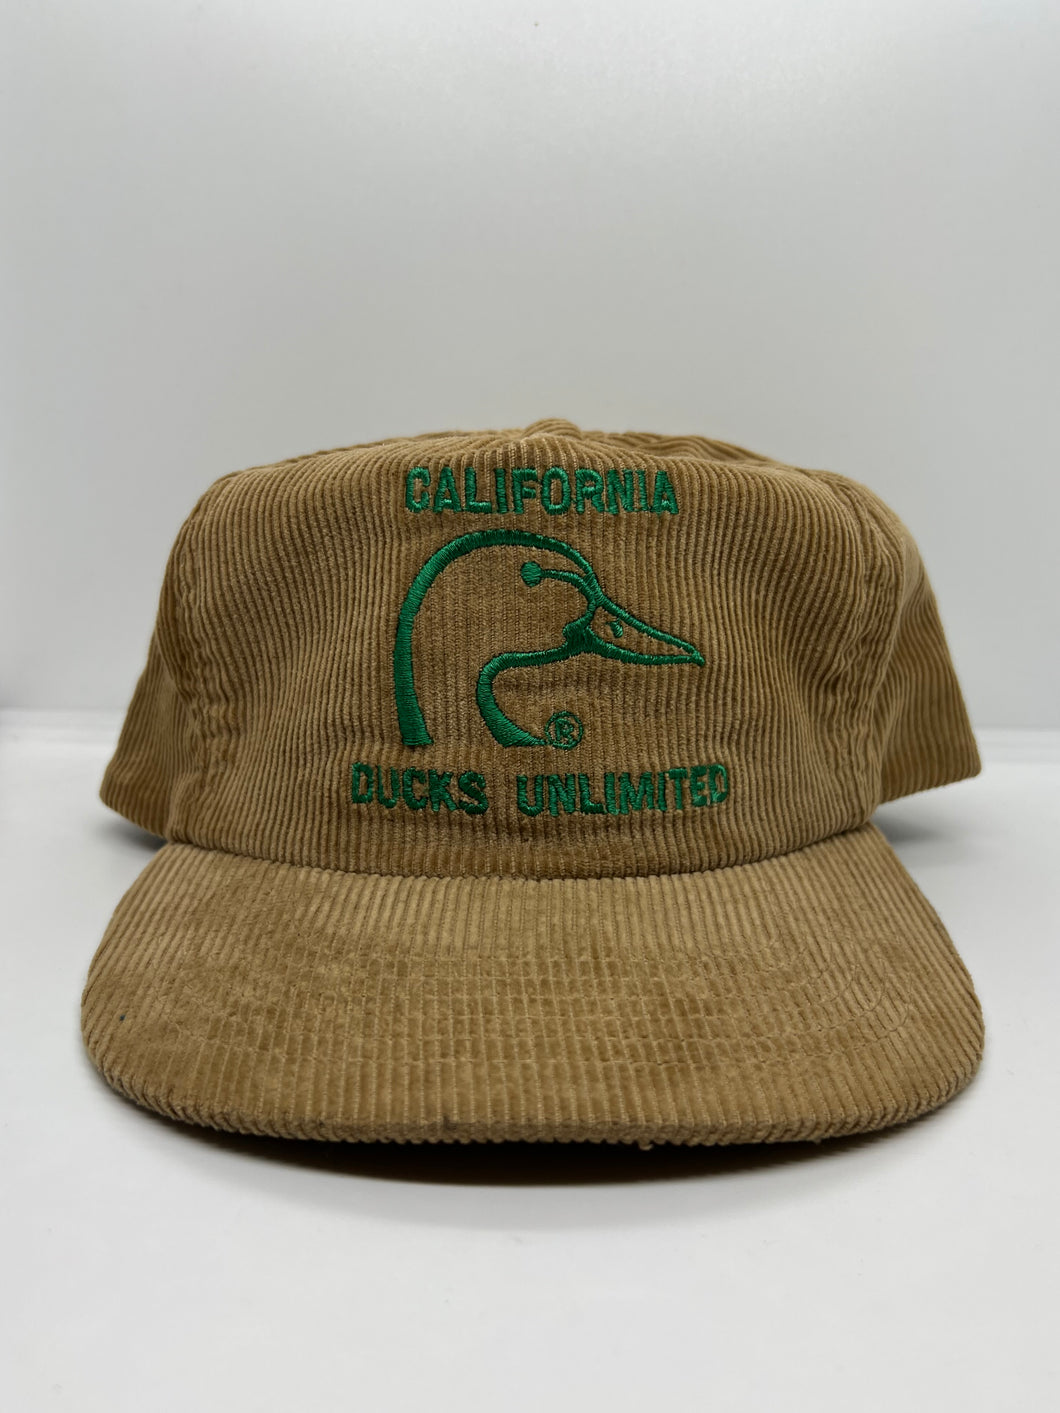 California Ducks Unlimited Hat